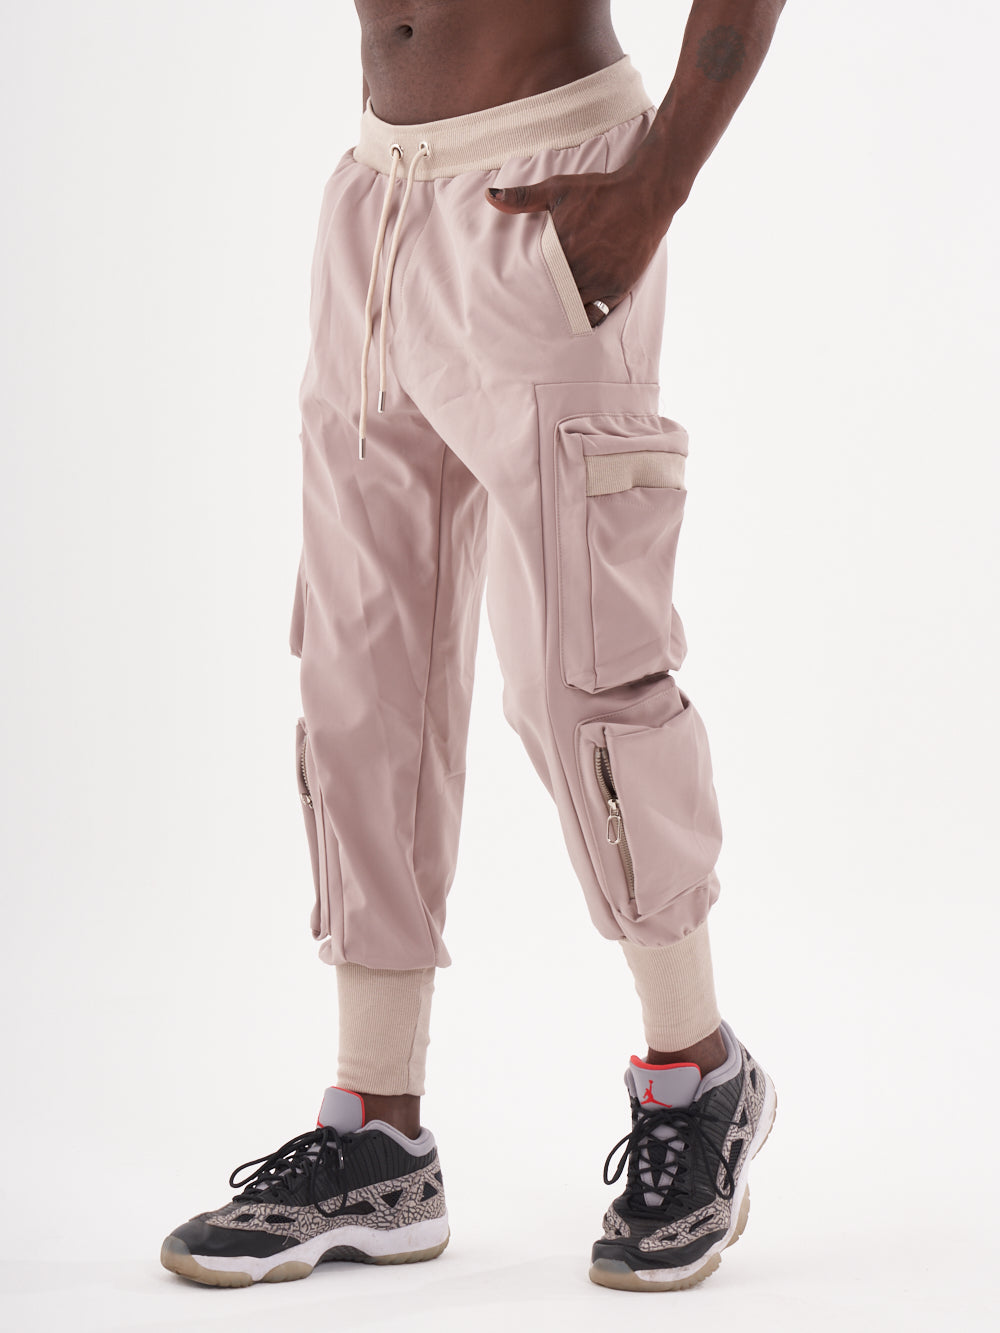 A man wearing OUTLIER | MAUVE cargo jogger pants.